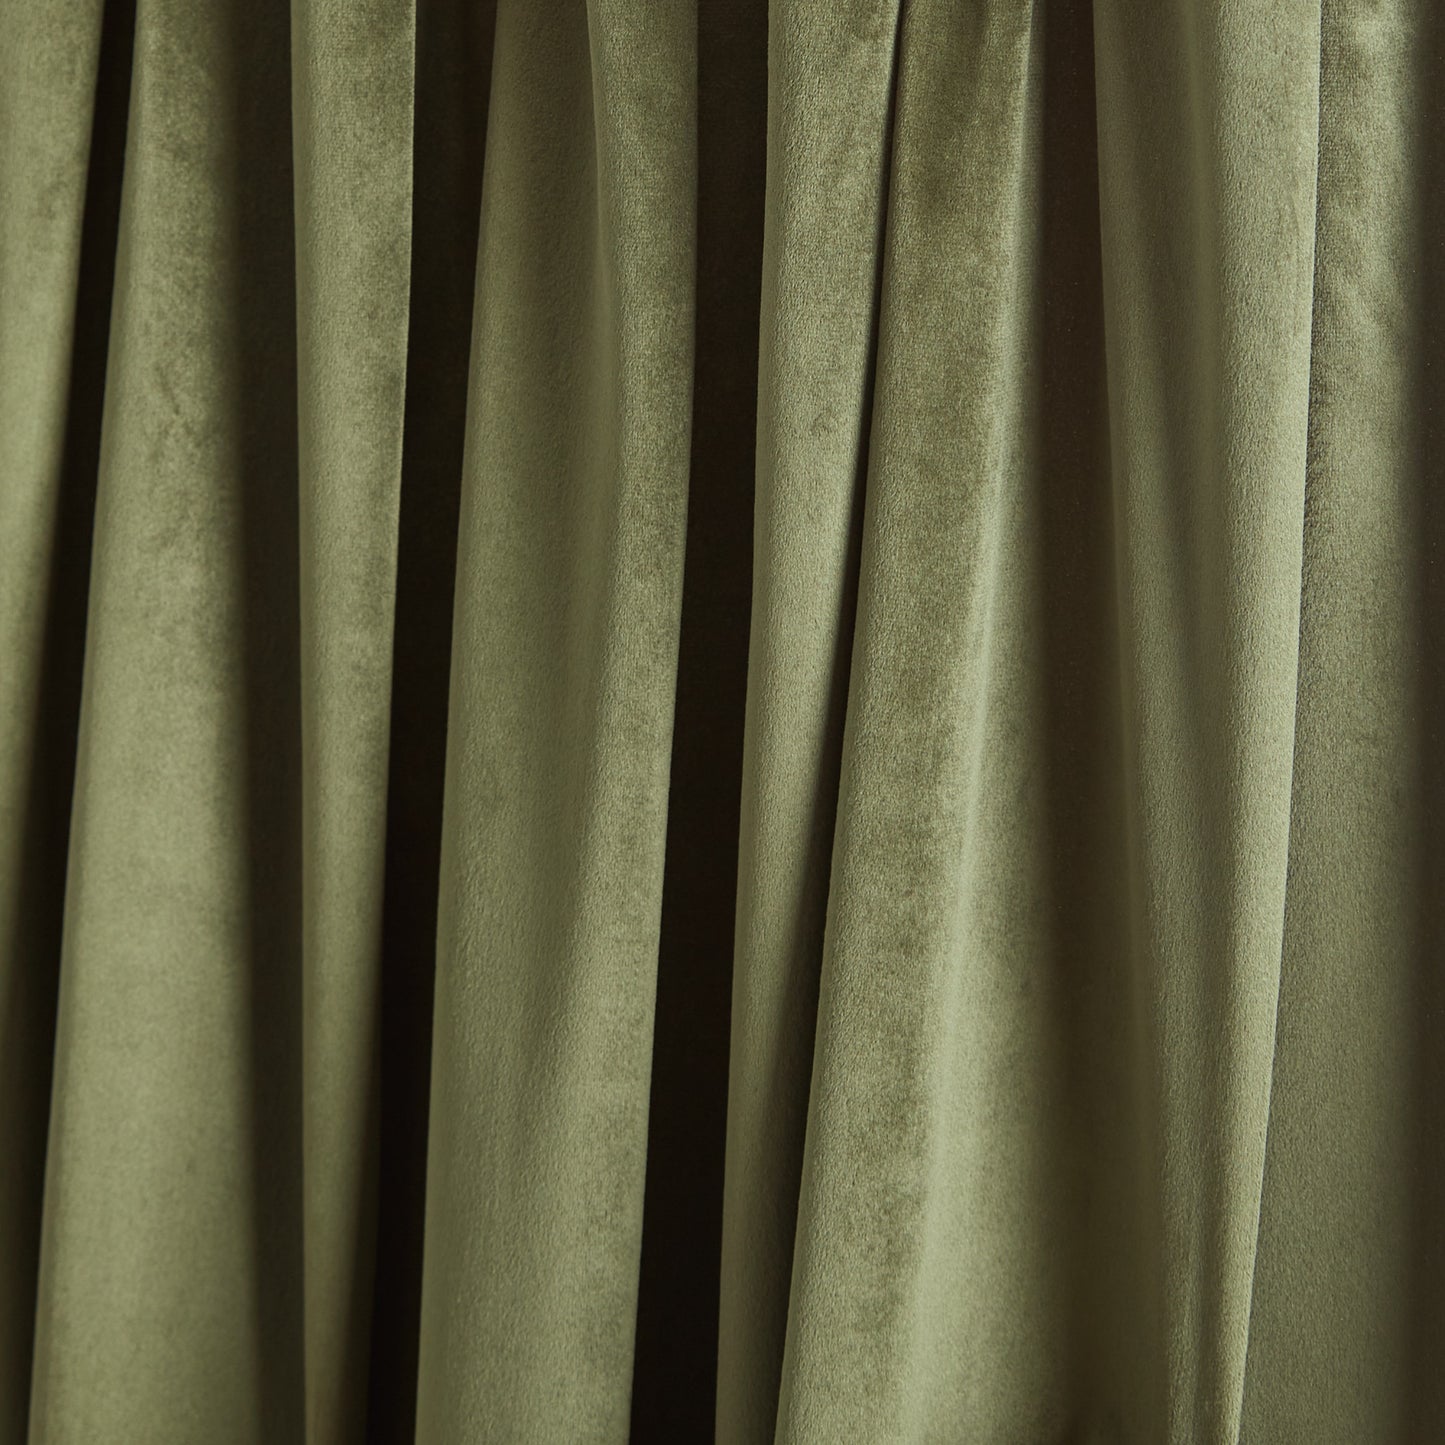 DKNY Velvet Inverted Pleat Curtain Panel Pair